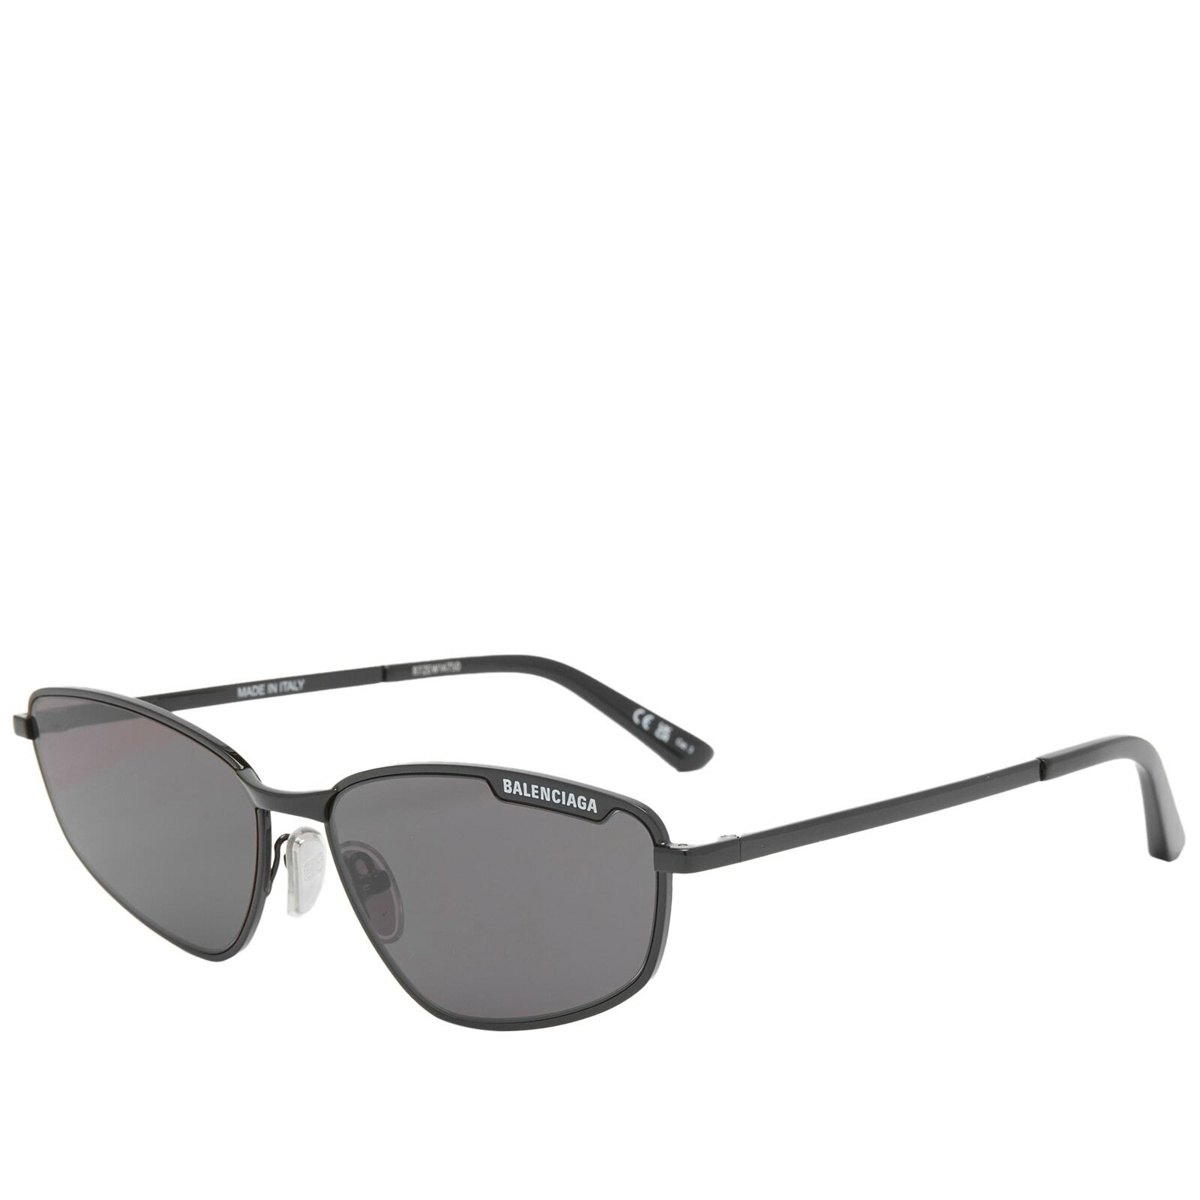 Balenciaga Eyewear BB0277S Sunglasses in Black/Grey Balenciaga